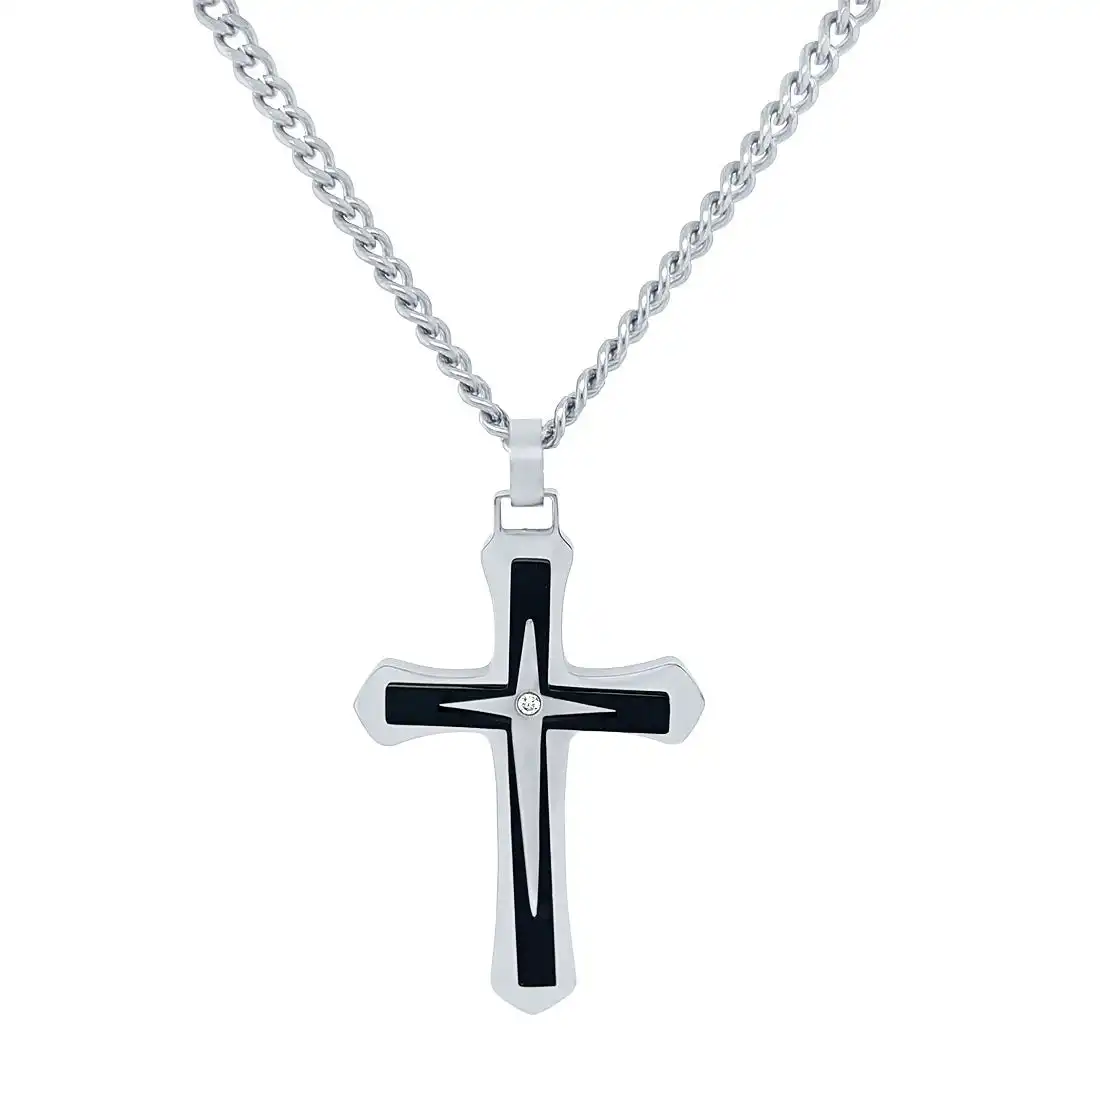 50cm Men's Stainless Steel Cross Necklace